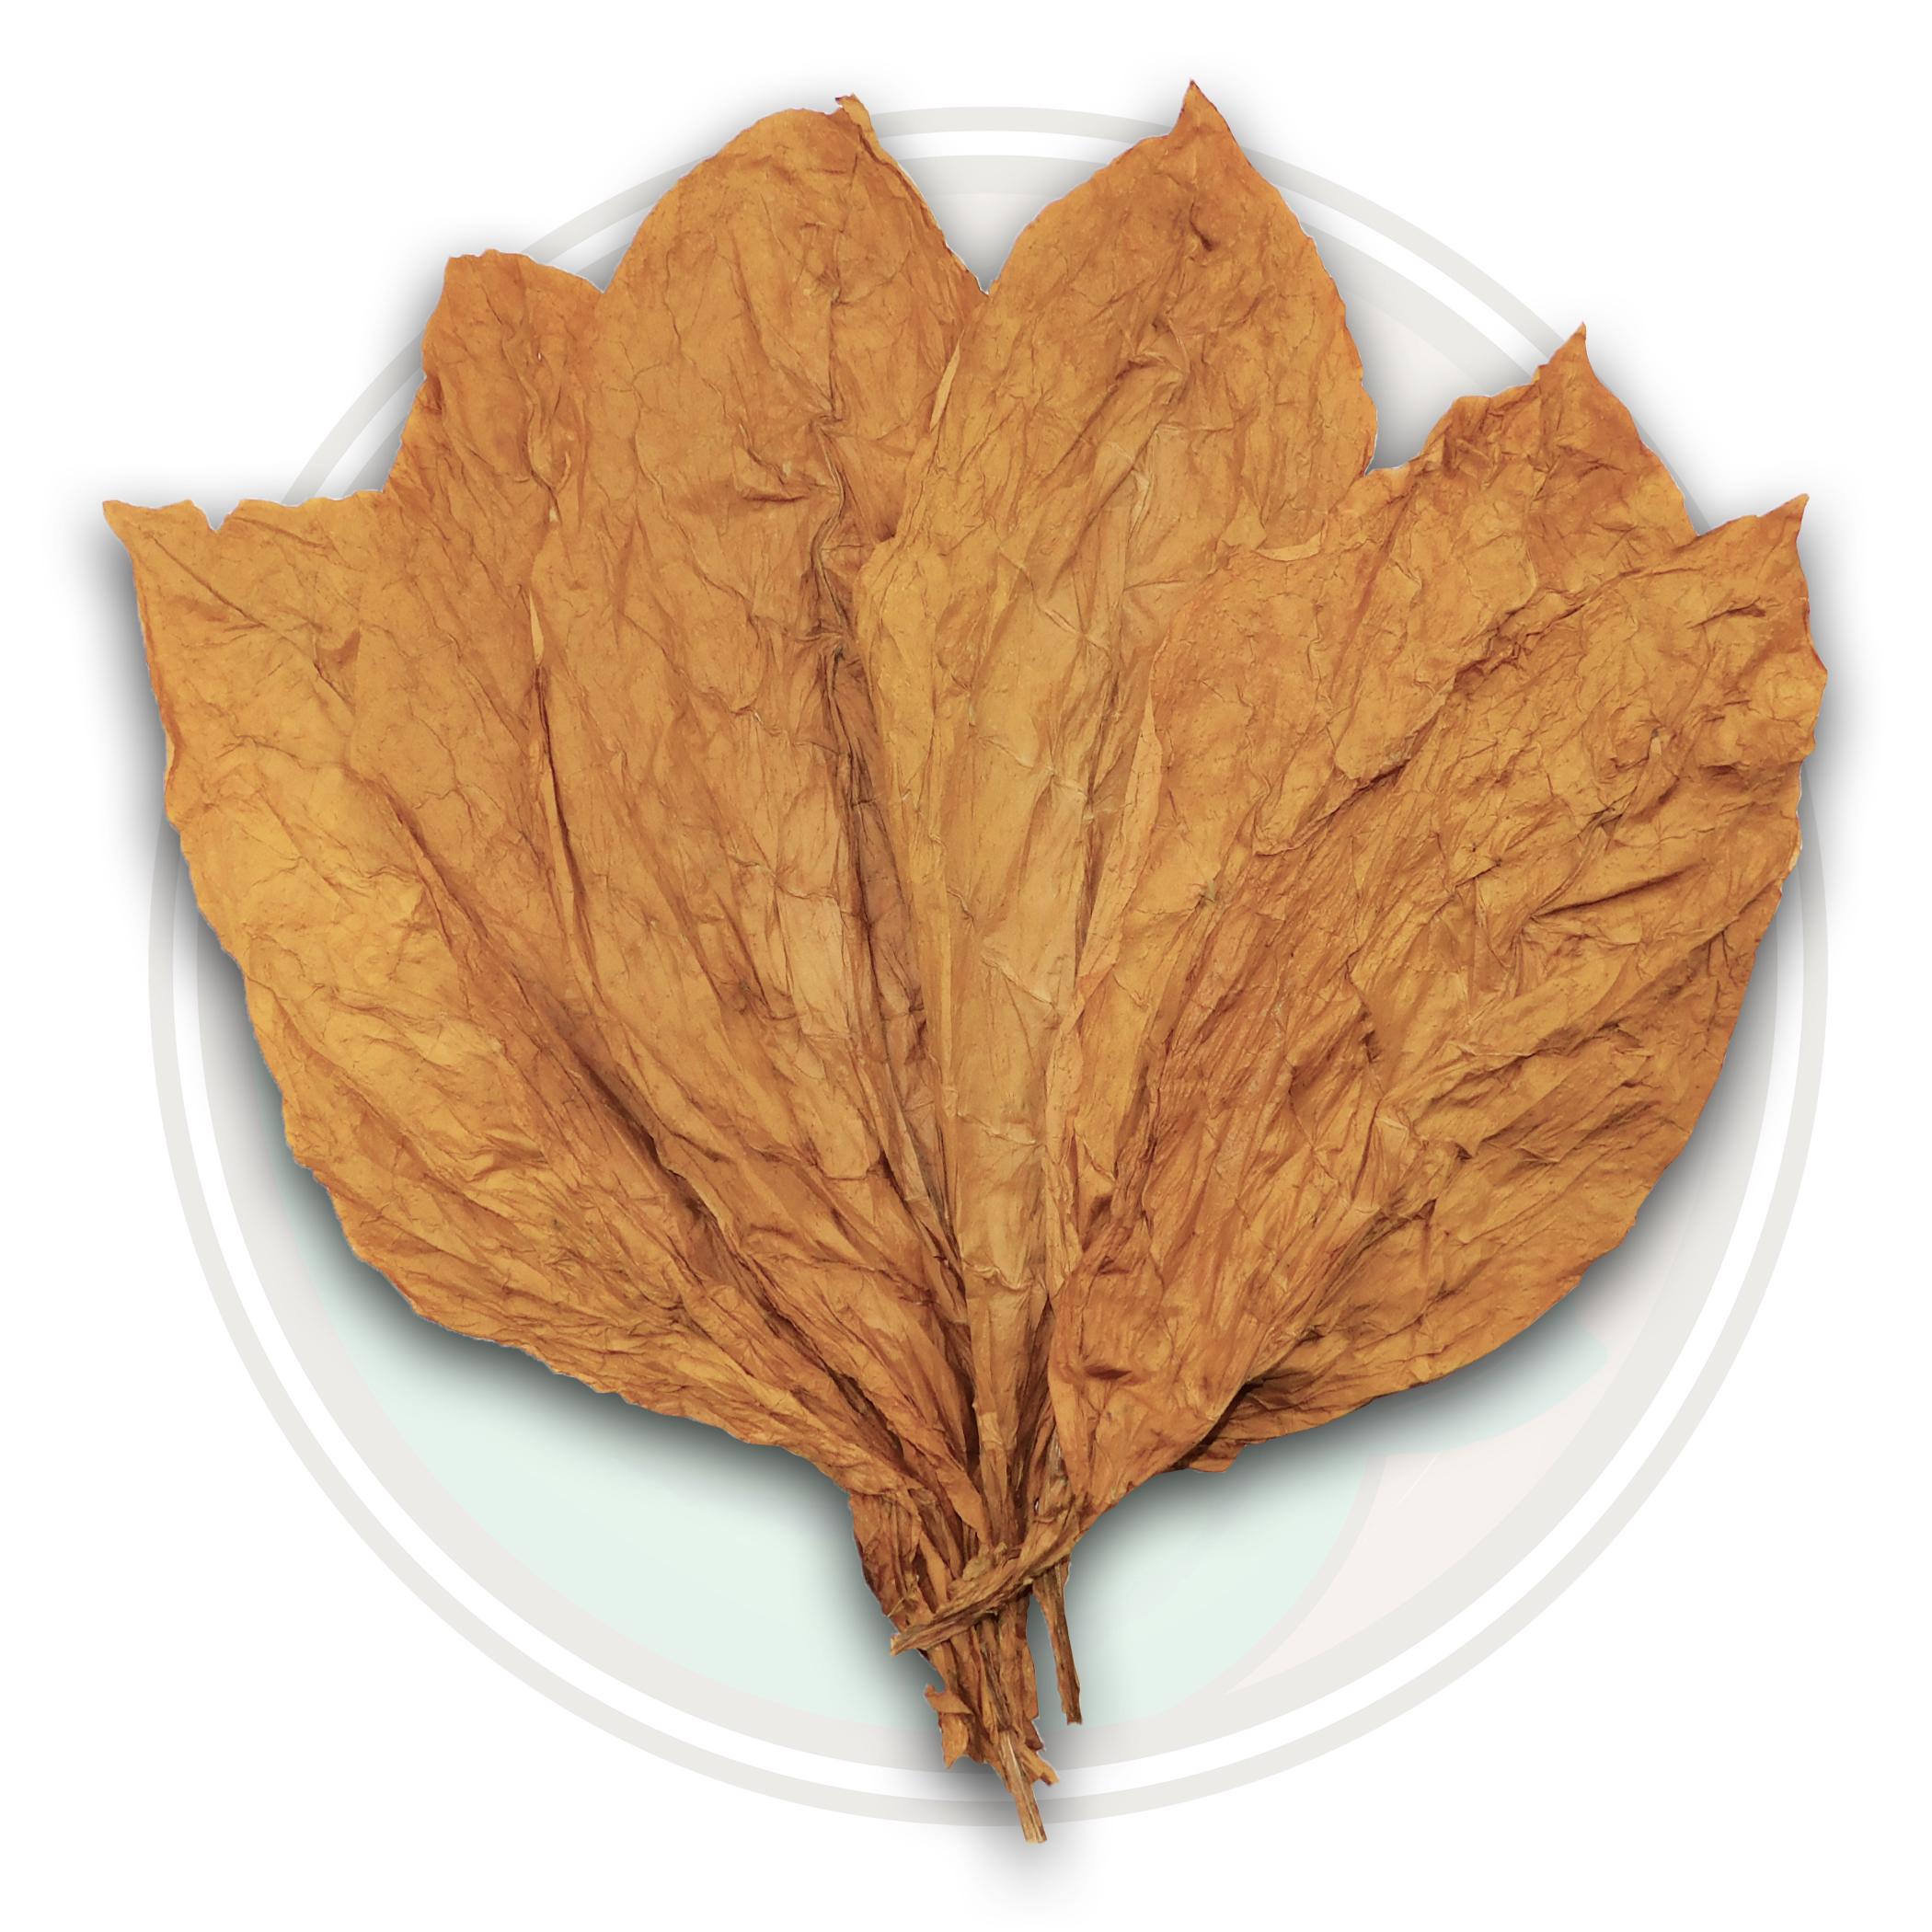 Ecuadorian Grown Connecticut Shade Cigar Wrapper Whole Leaf Tobacco